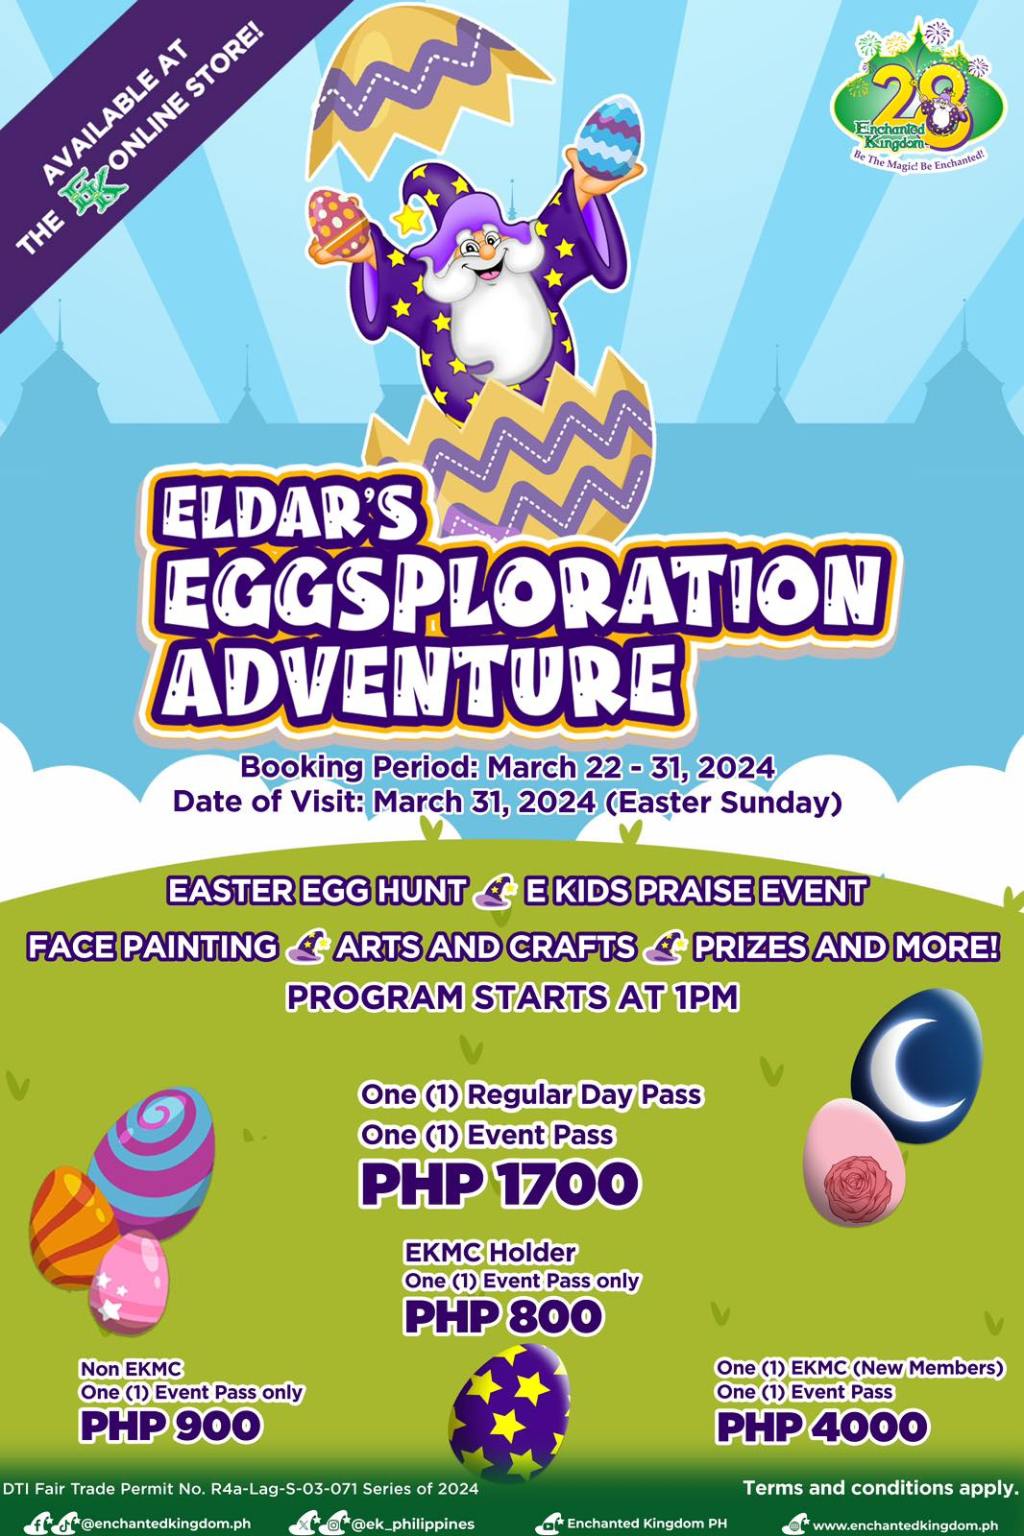 Enchanted Kingdom celebrates Easter with Eldar’s Eggsploration Adventure